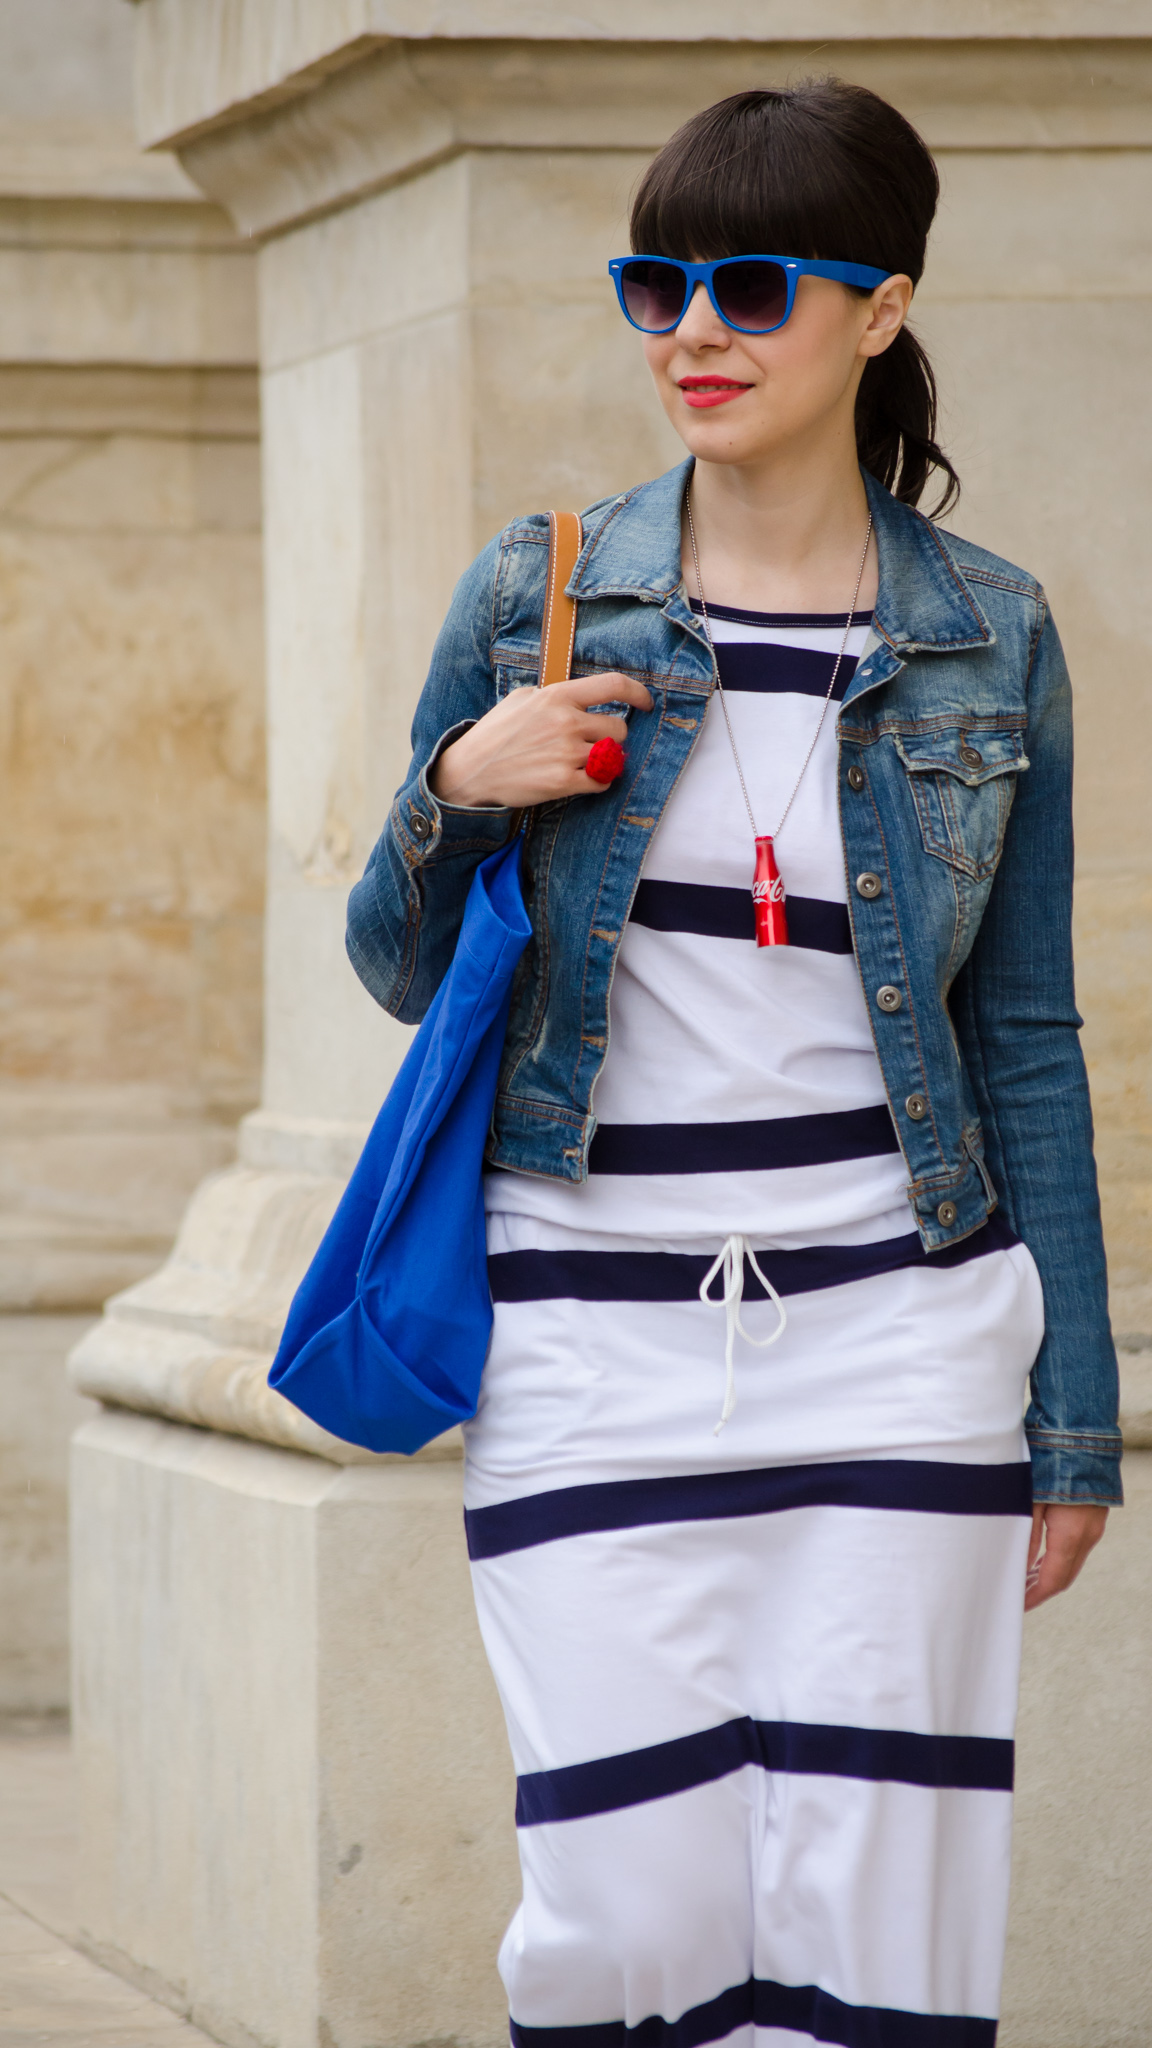 stripes maxi dress blue coca cola bottle converse red blue bag navy jeans jacket